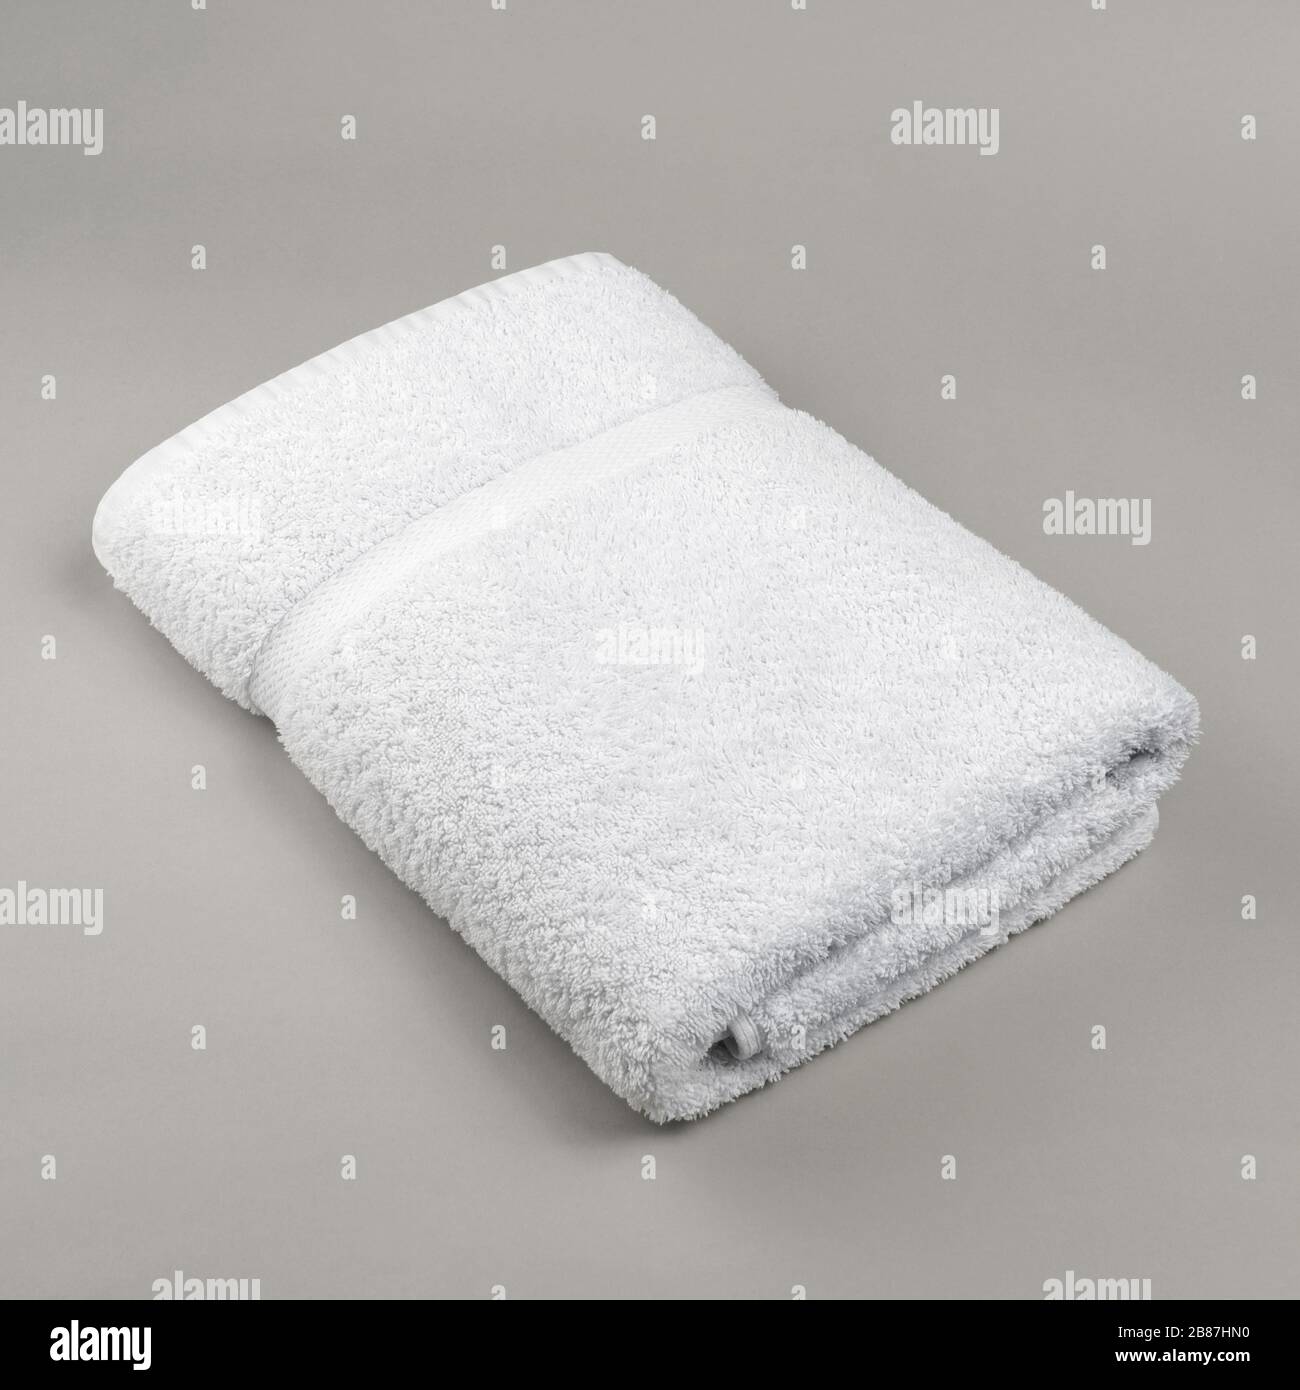 https://c8.alamy.com/comp/2B87HN0/neat-folded-fluffy-fresh-white-towel-on-gray-background-top-view-2B87HN0.jpg